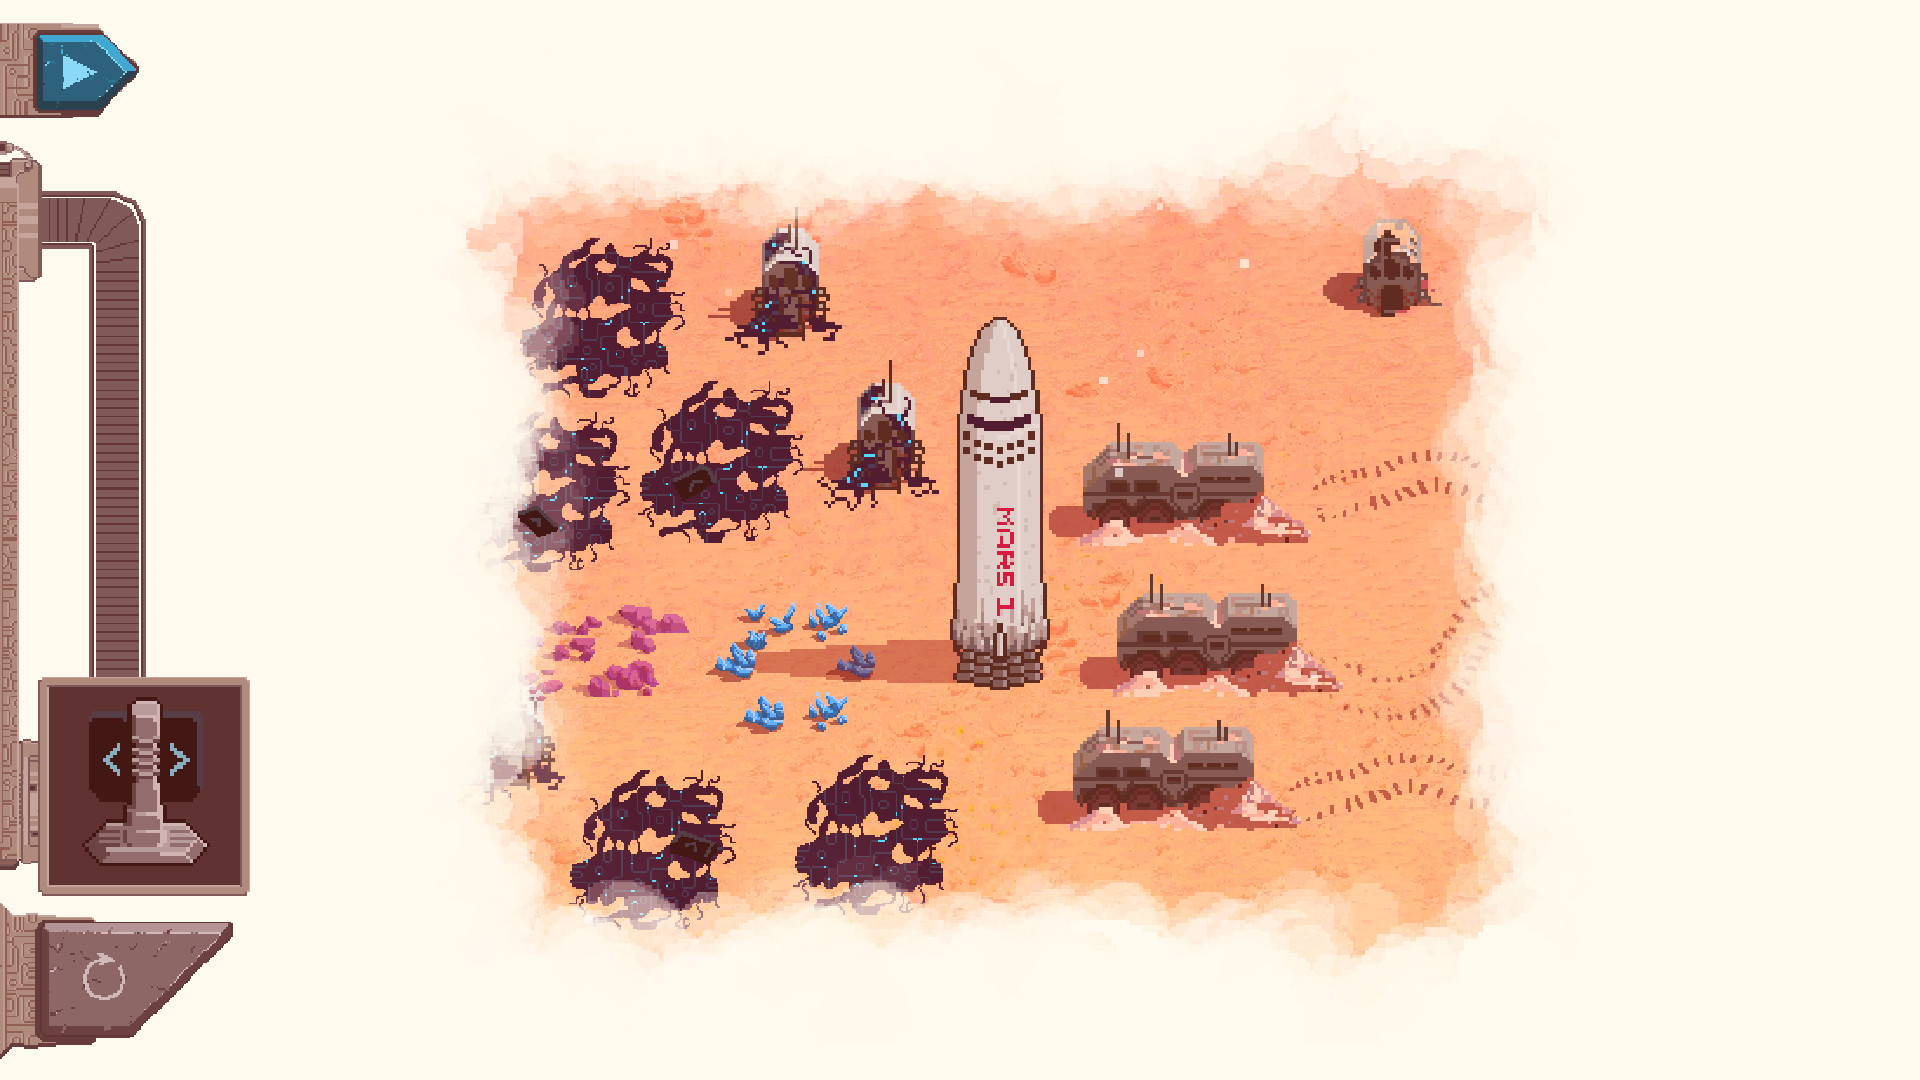 Mars Power Industries promo image